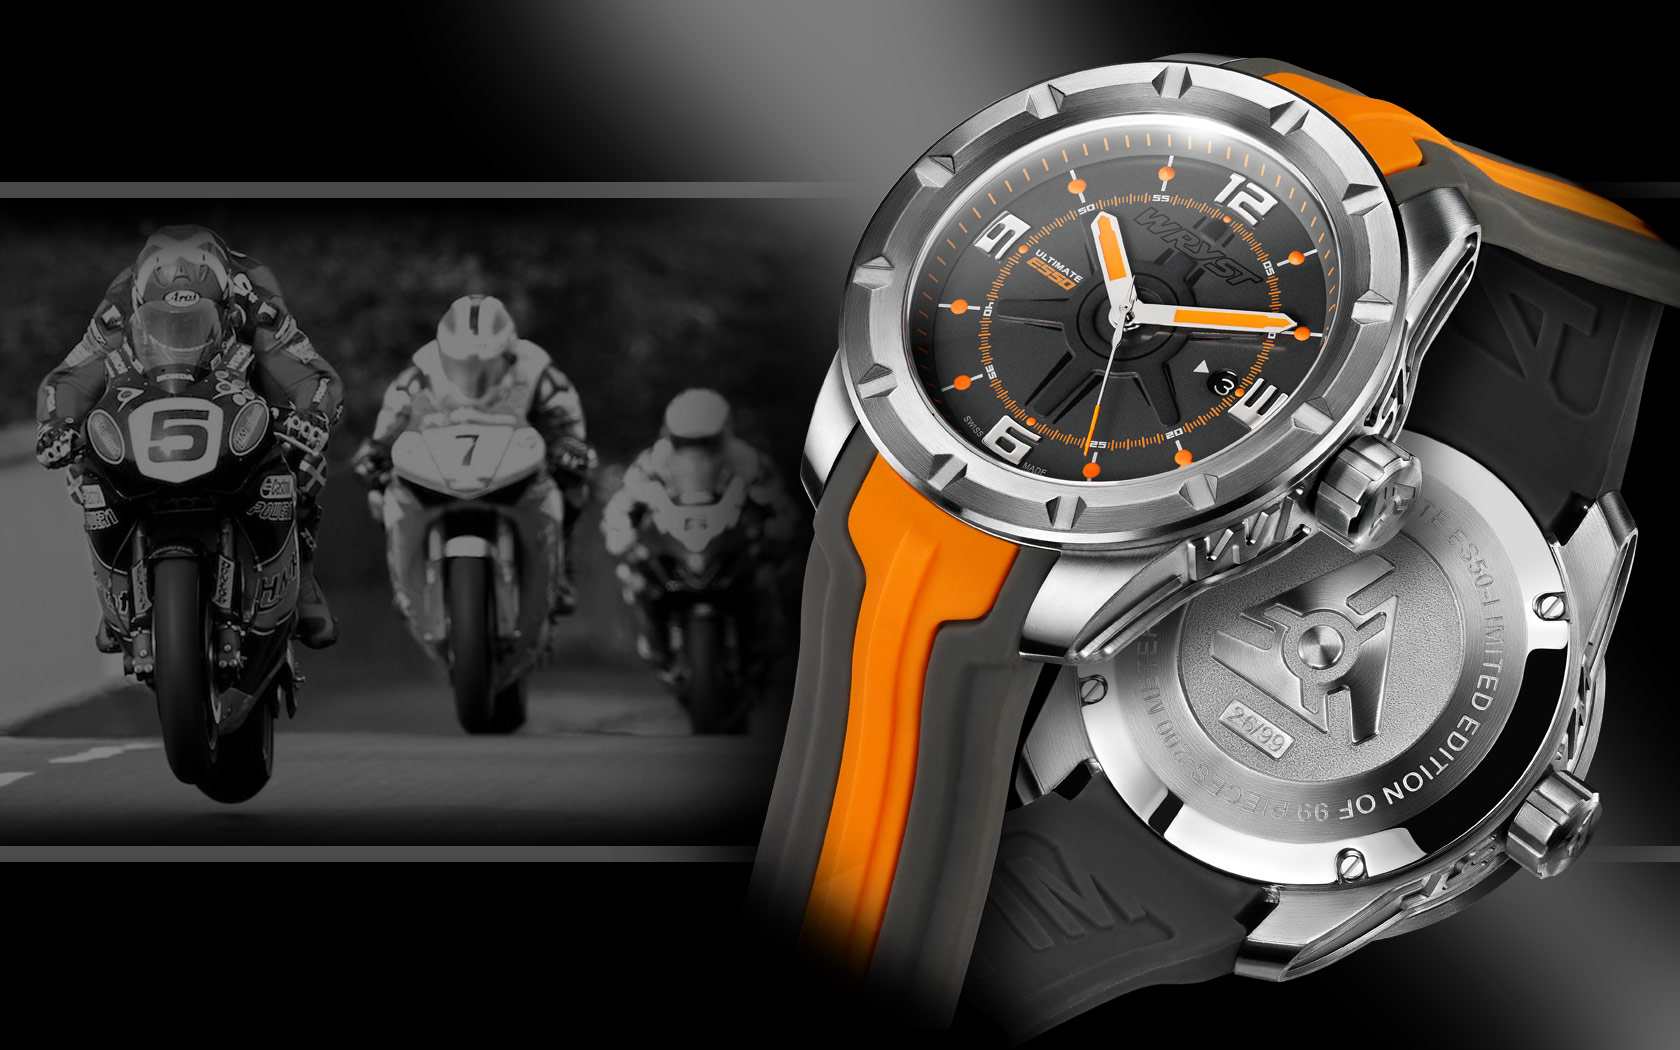 watch wallpaper,watch,analog watch,orange,fashion accessory,brand